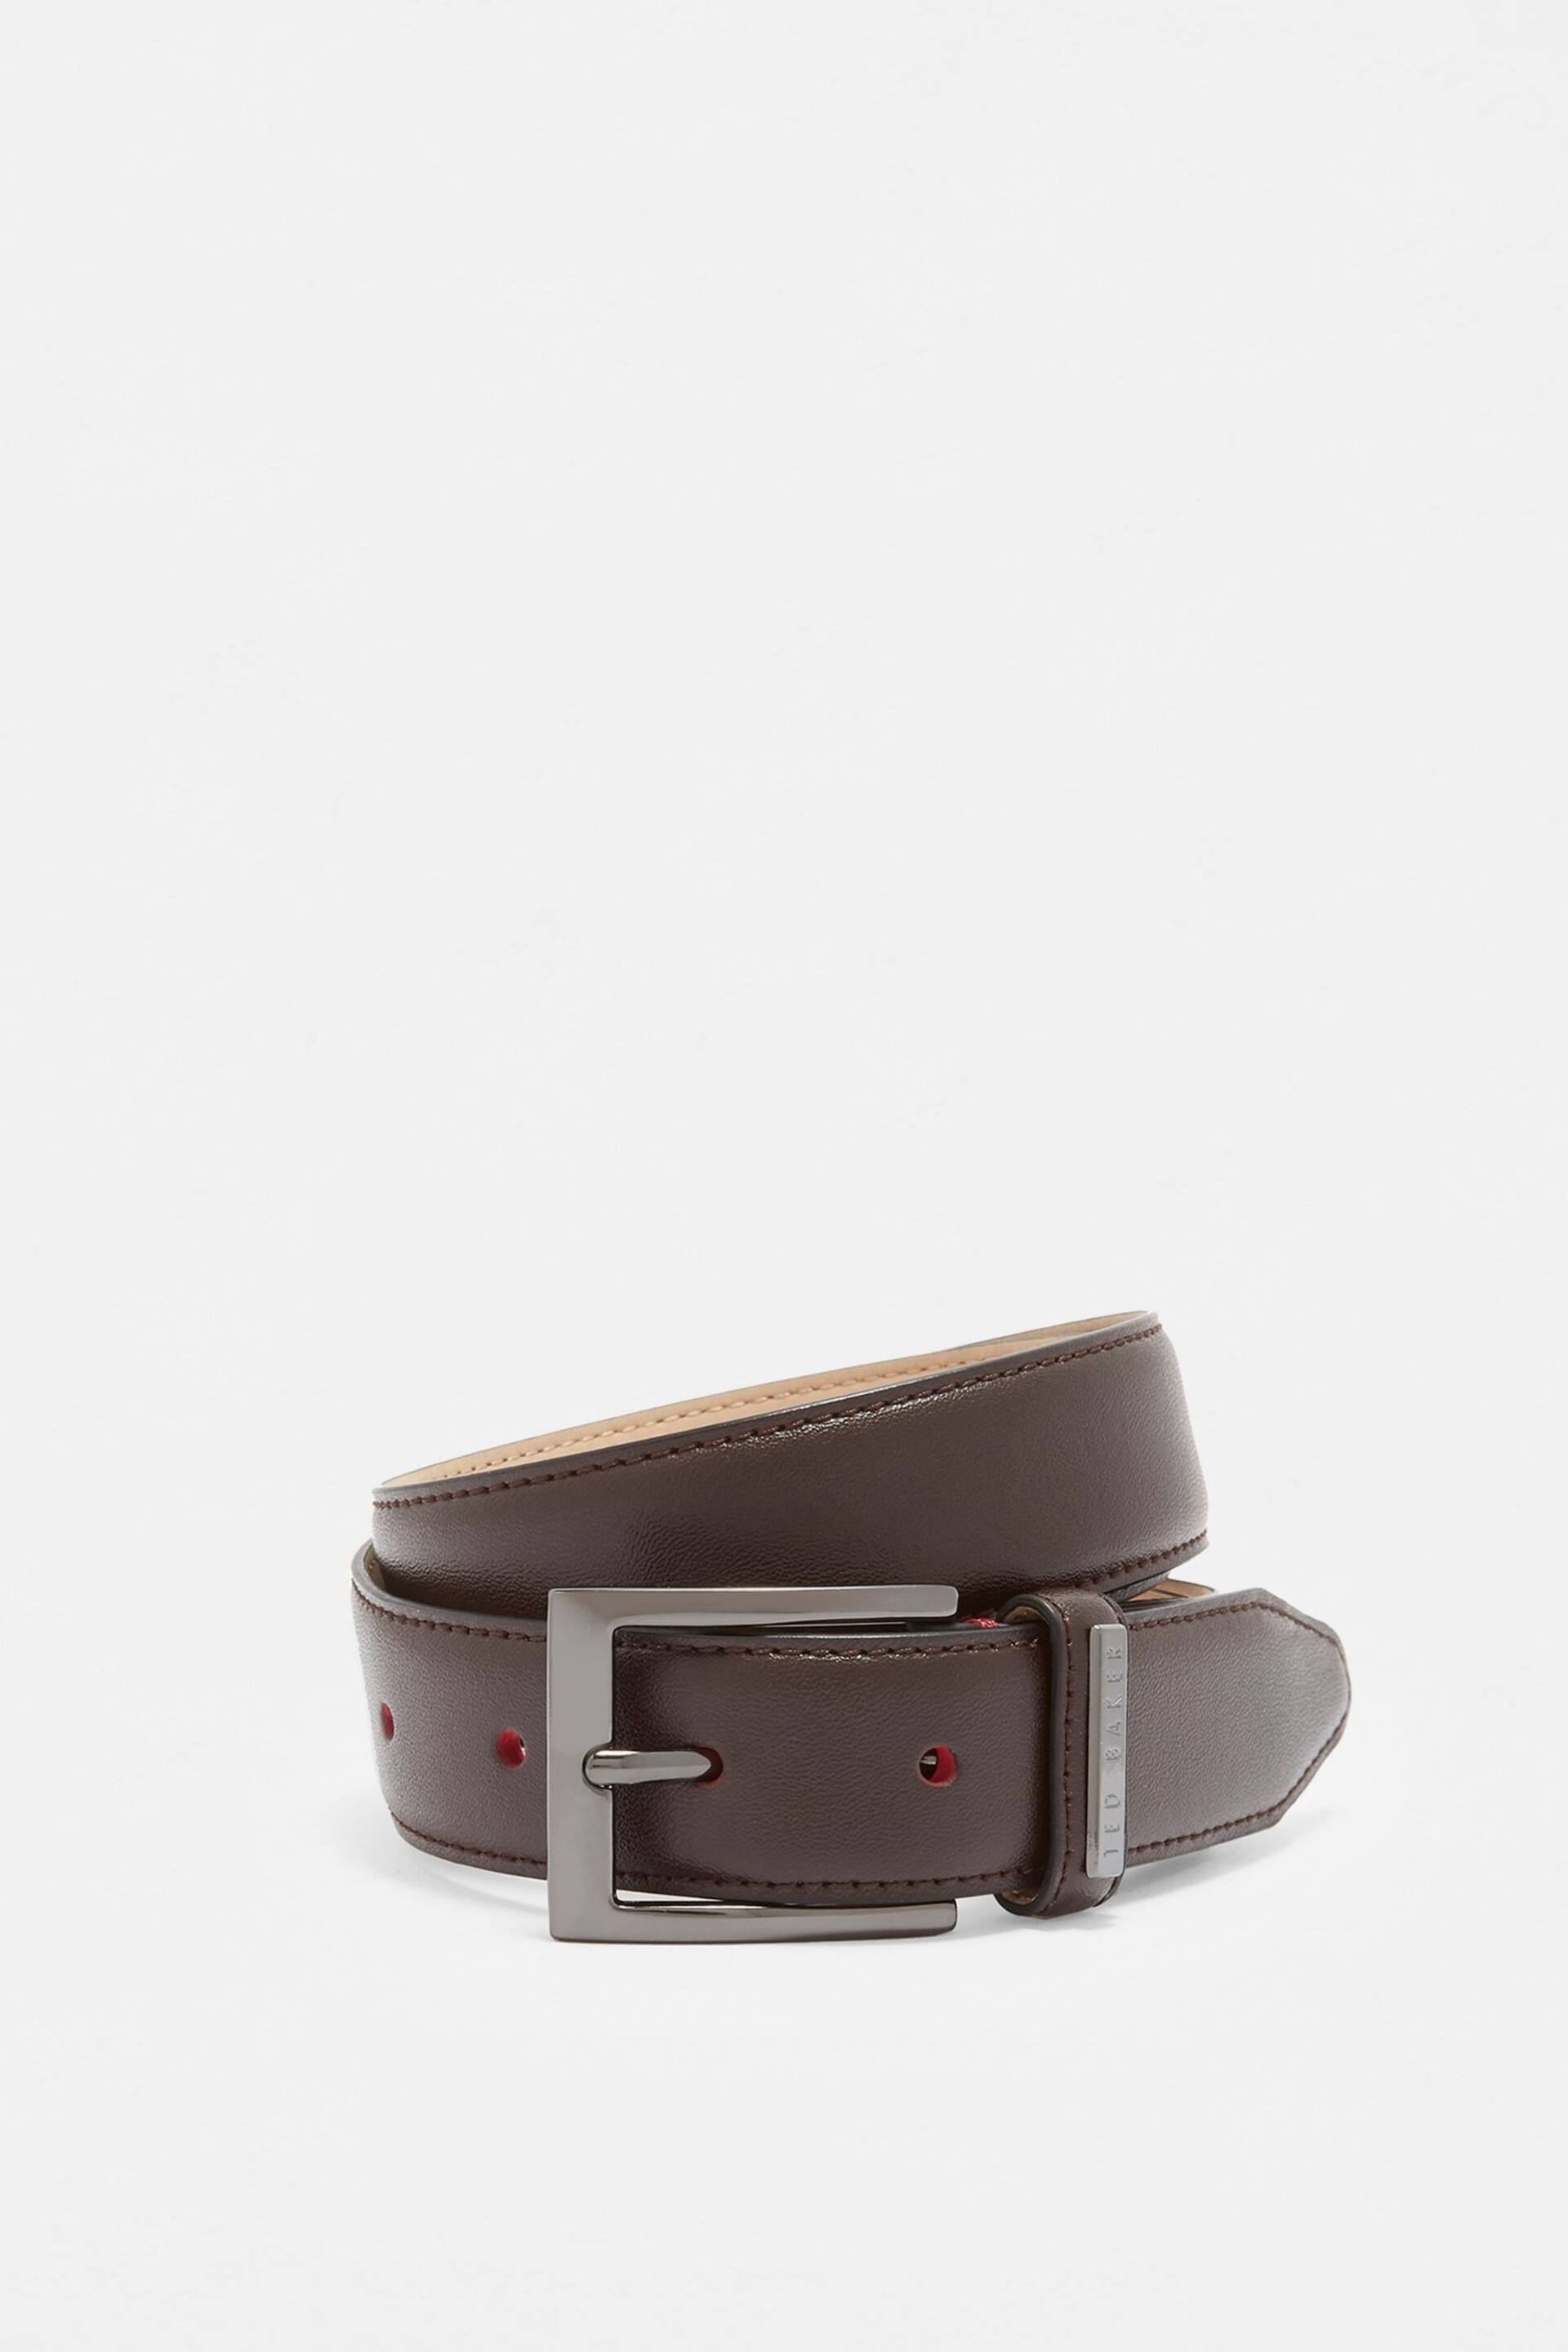 Ted Baker Brown Lizwiz Leather Keeper Plate Belt - Image 1 of 2